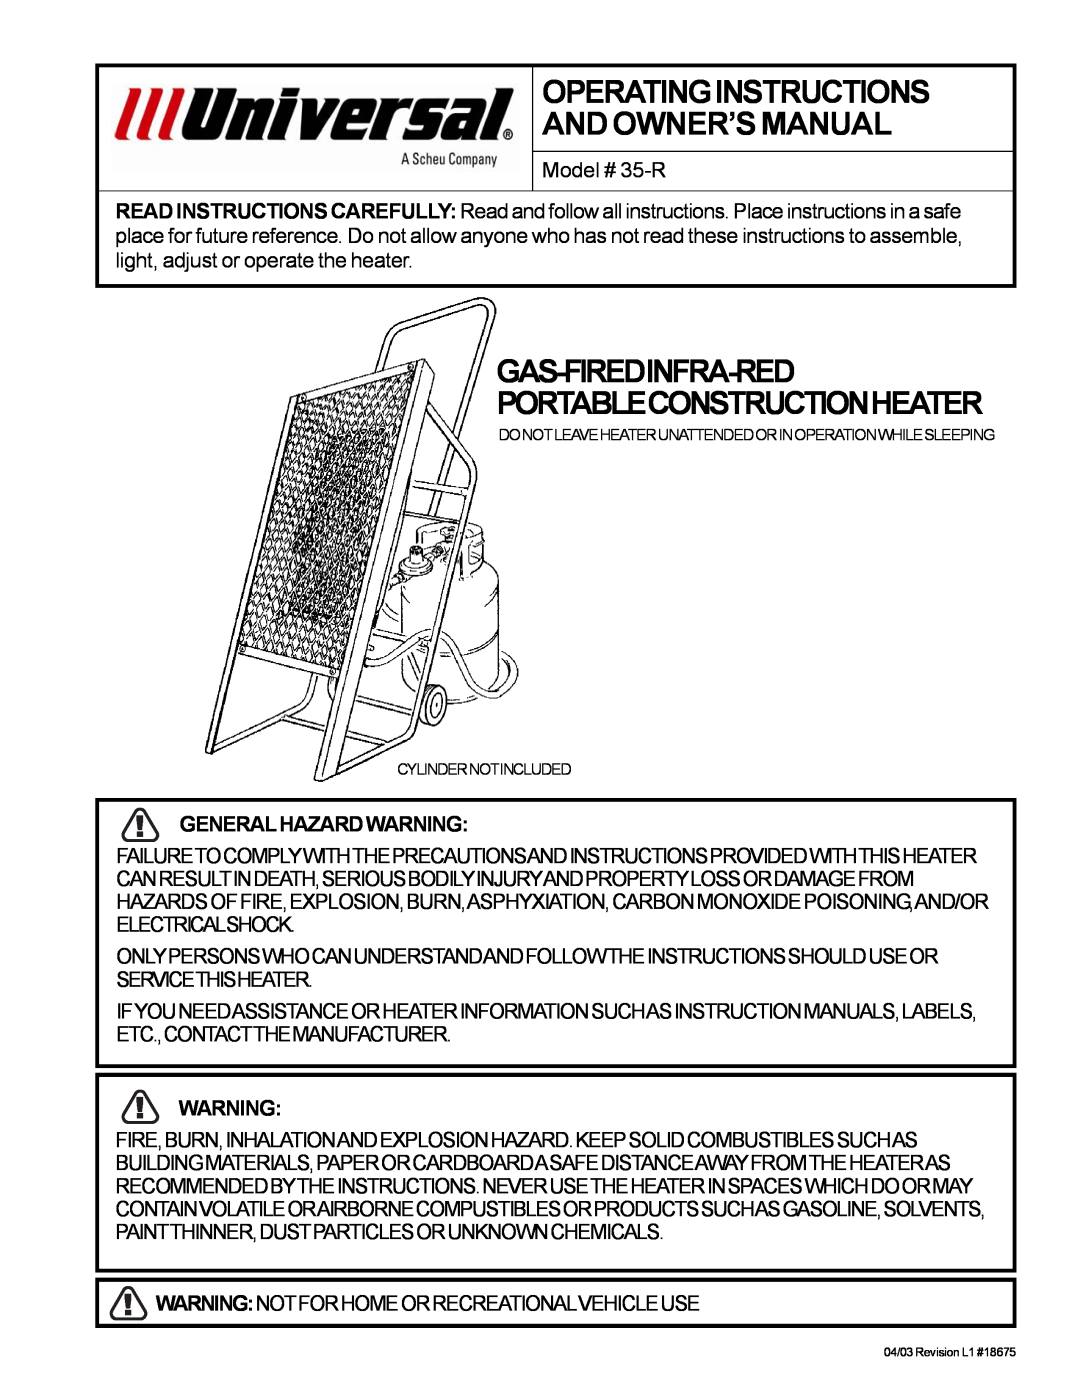 Universal owner manual Gas-Firedinfra-Red Portableconstructionheater, Model # 35-R, Generalhazard Warning 